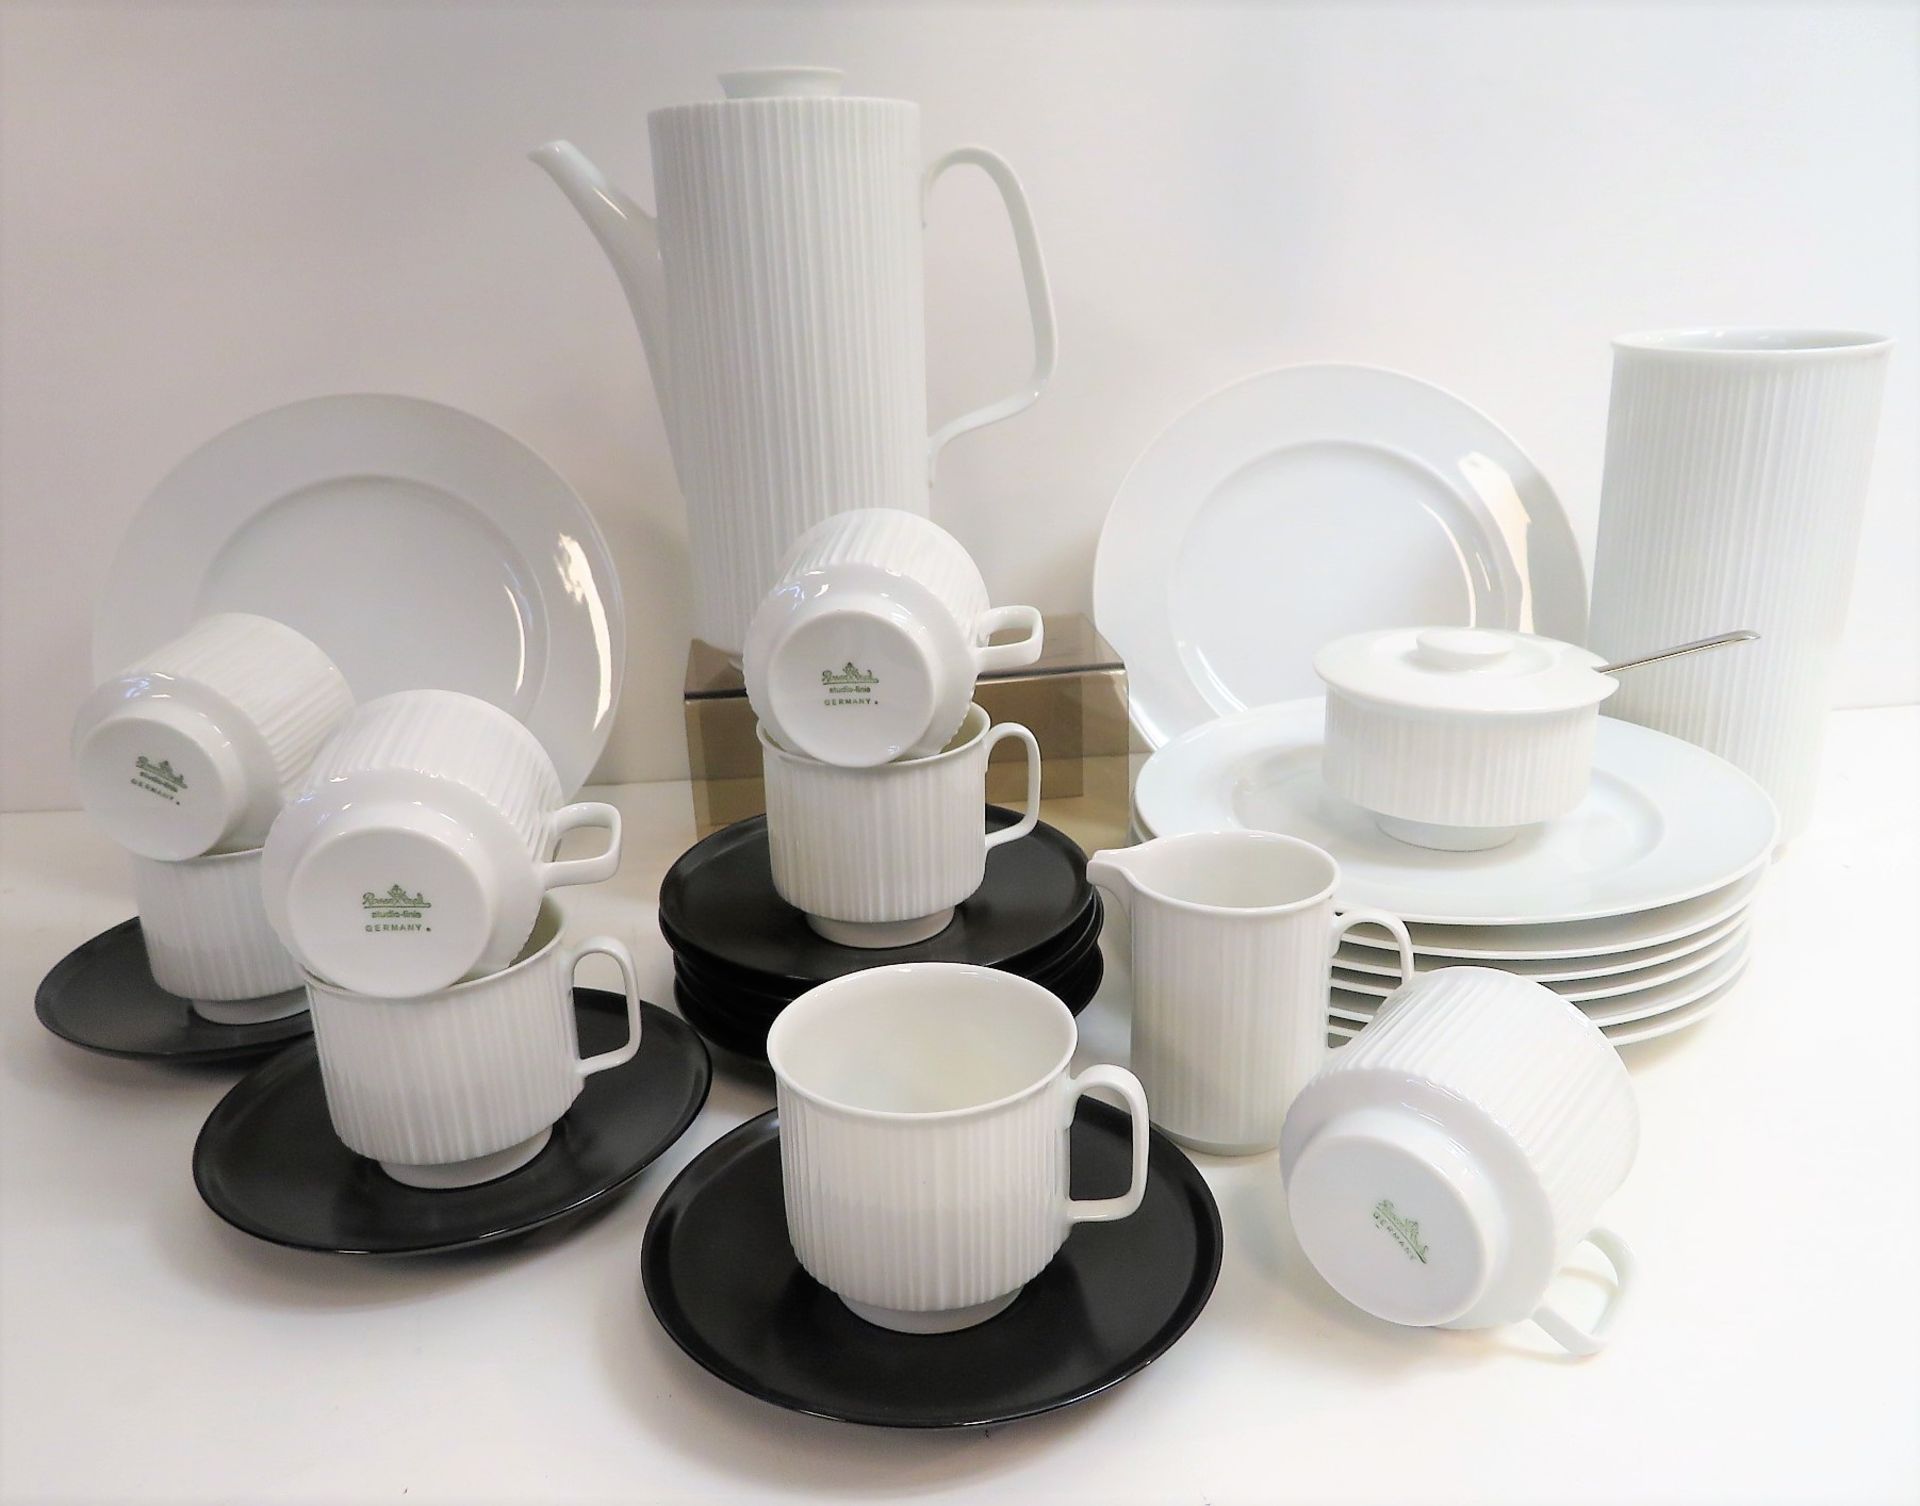 28 teiliges Kaffeeservice, Rosenthal, Studioline, Entwurf Tapio Wirrkala (1915 - 1985), um 1962, Mo